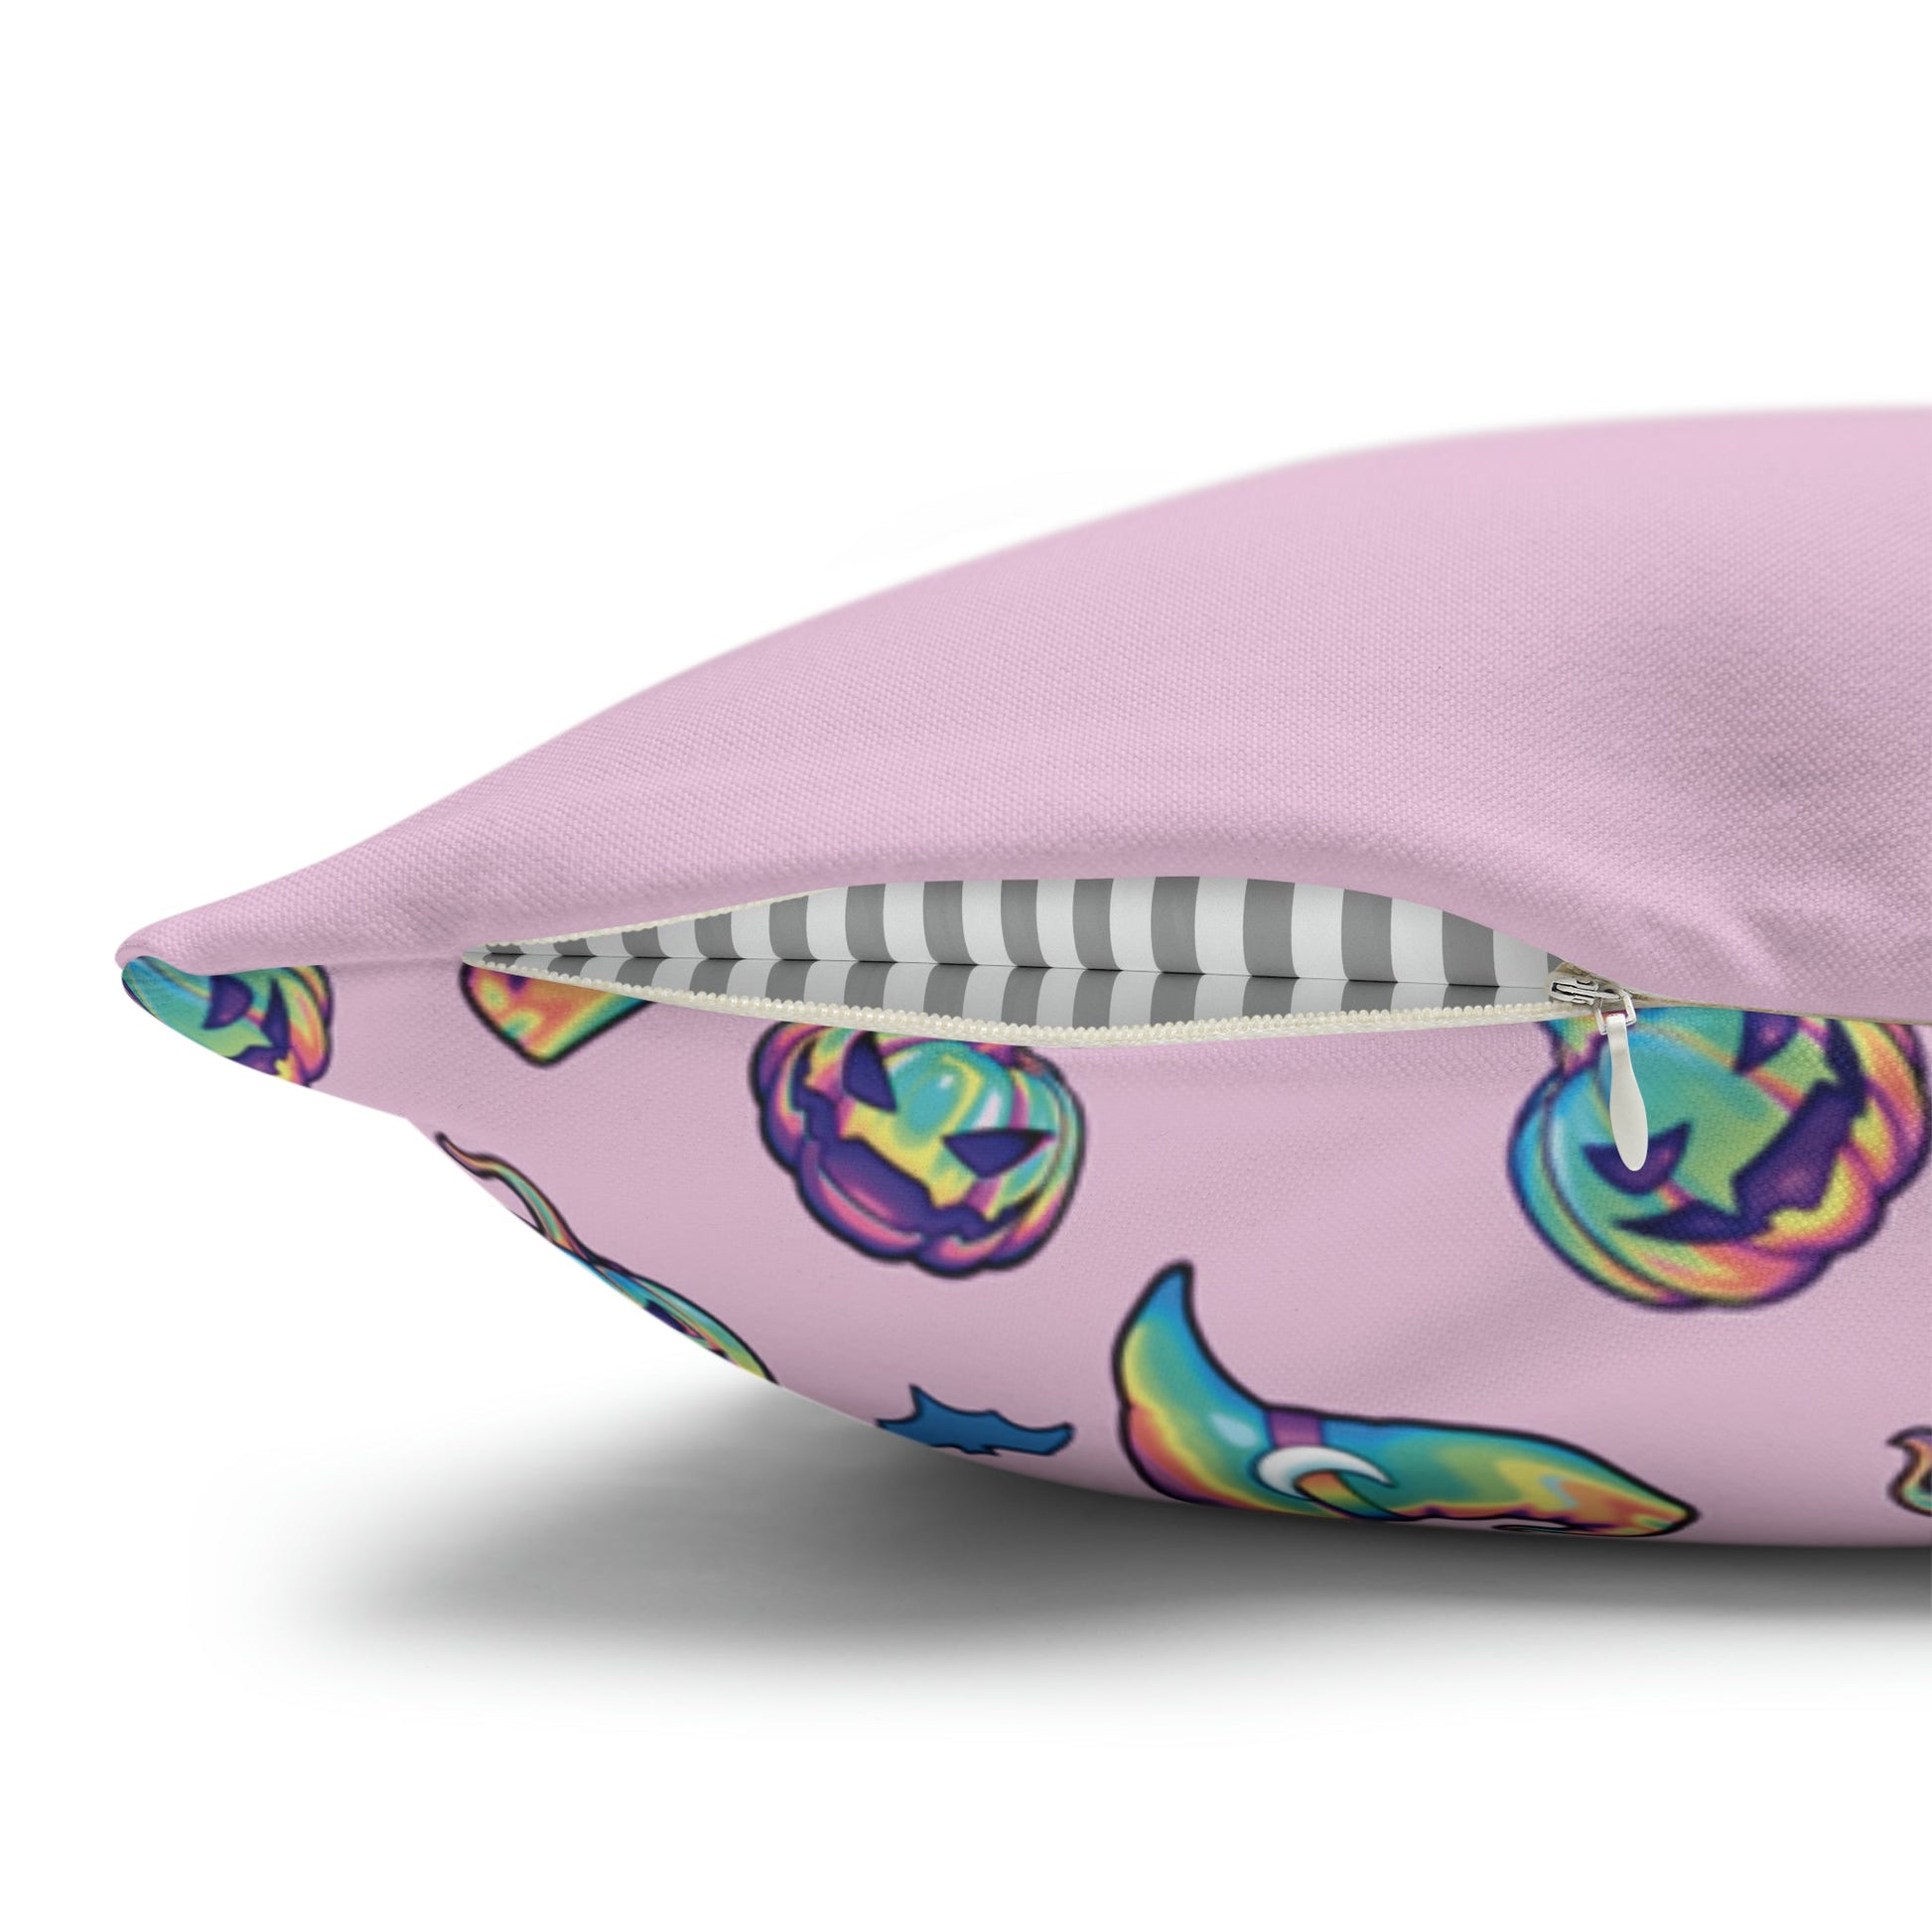 Joke-o’-Lantern Reversible Square Pillow Case - Pink - Driftless Enchantments